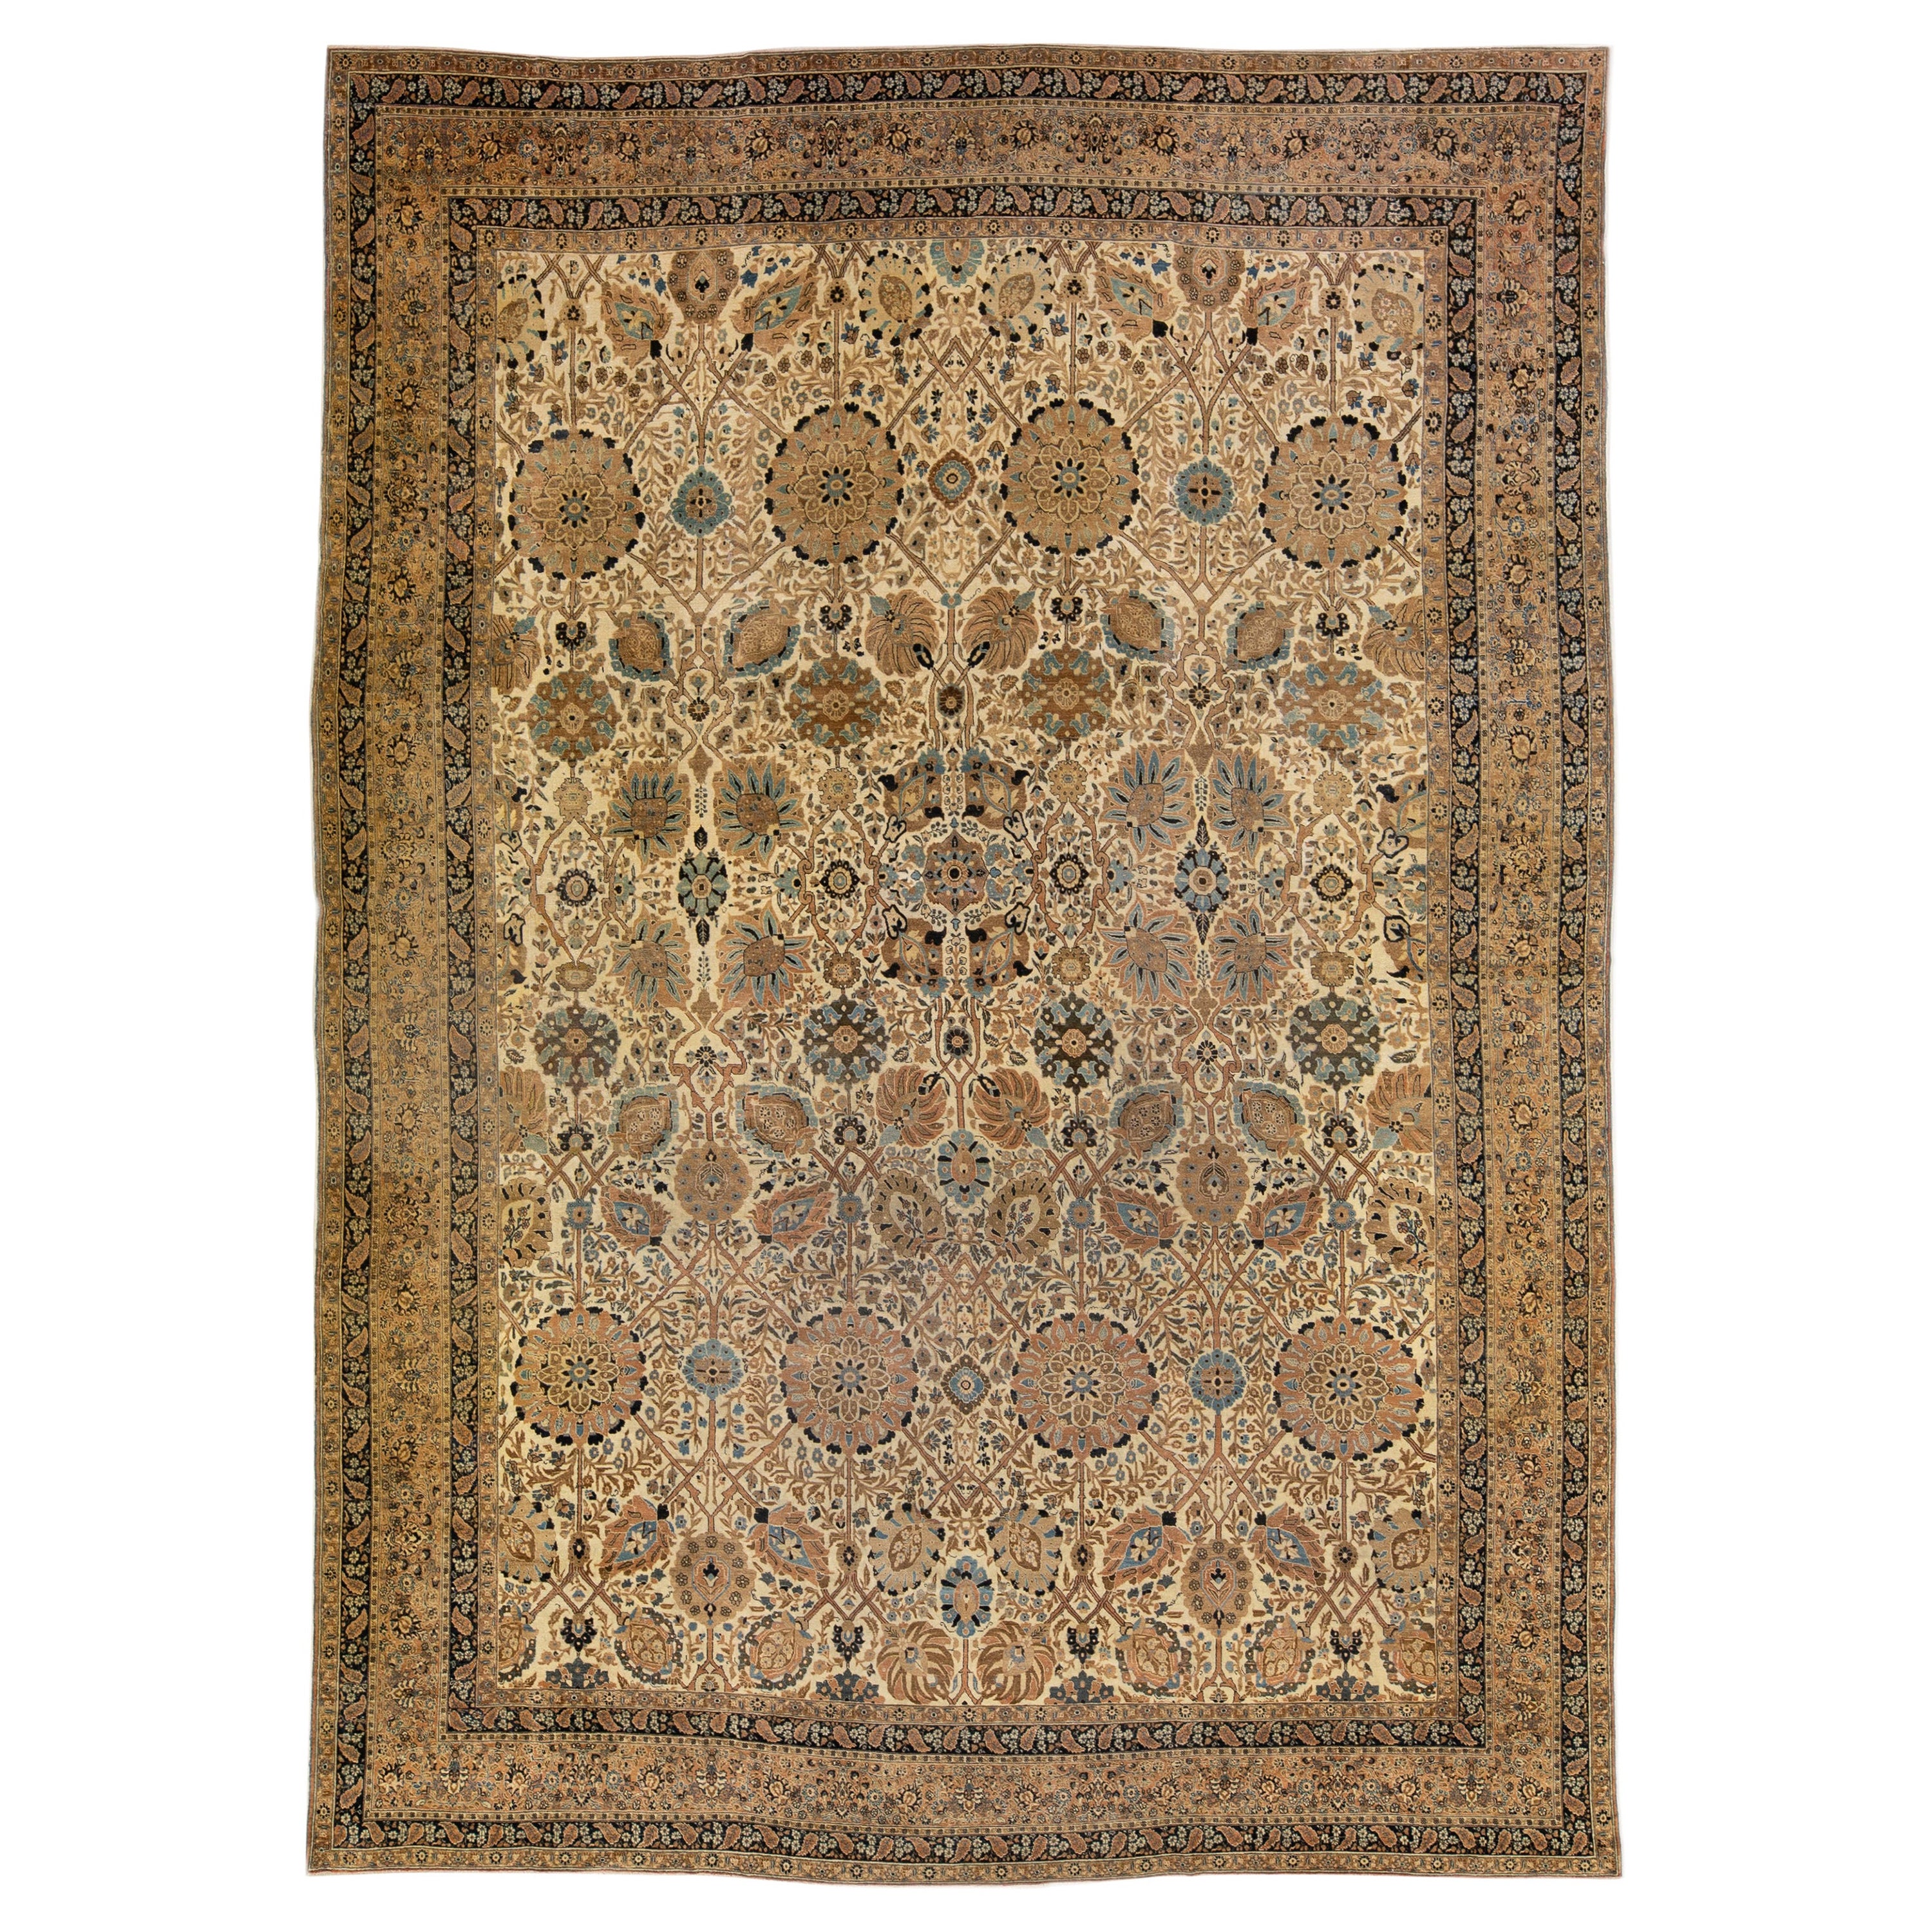 Antique Persian Tabriz Handmade Allover Motif Beige Oversize Wool Rug For Sale